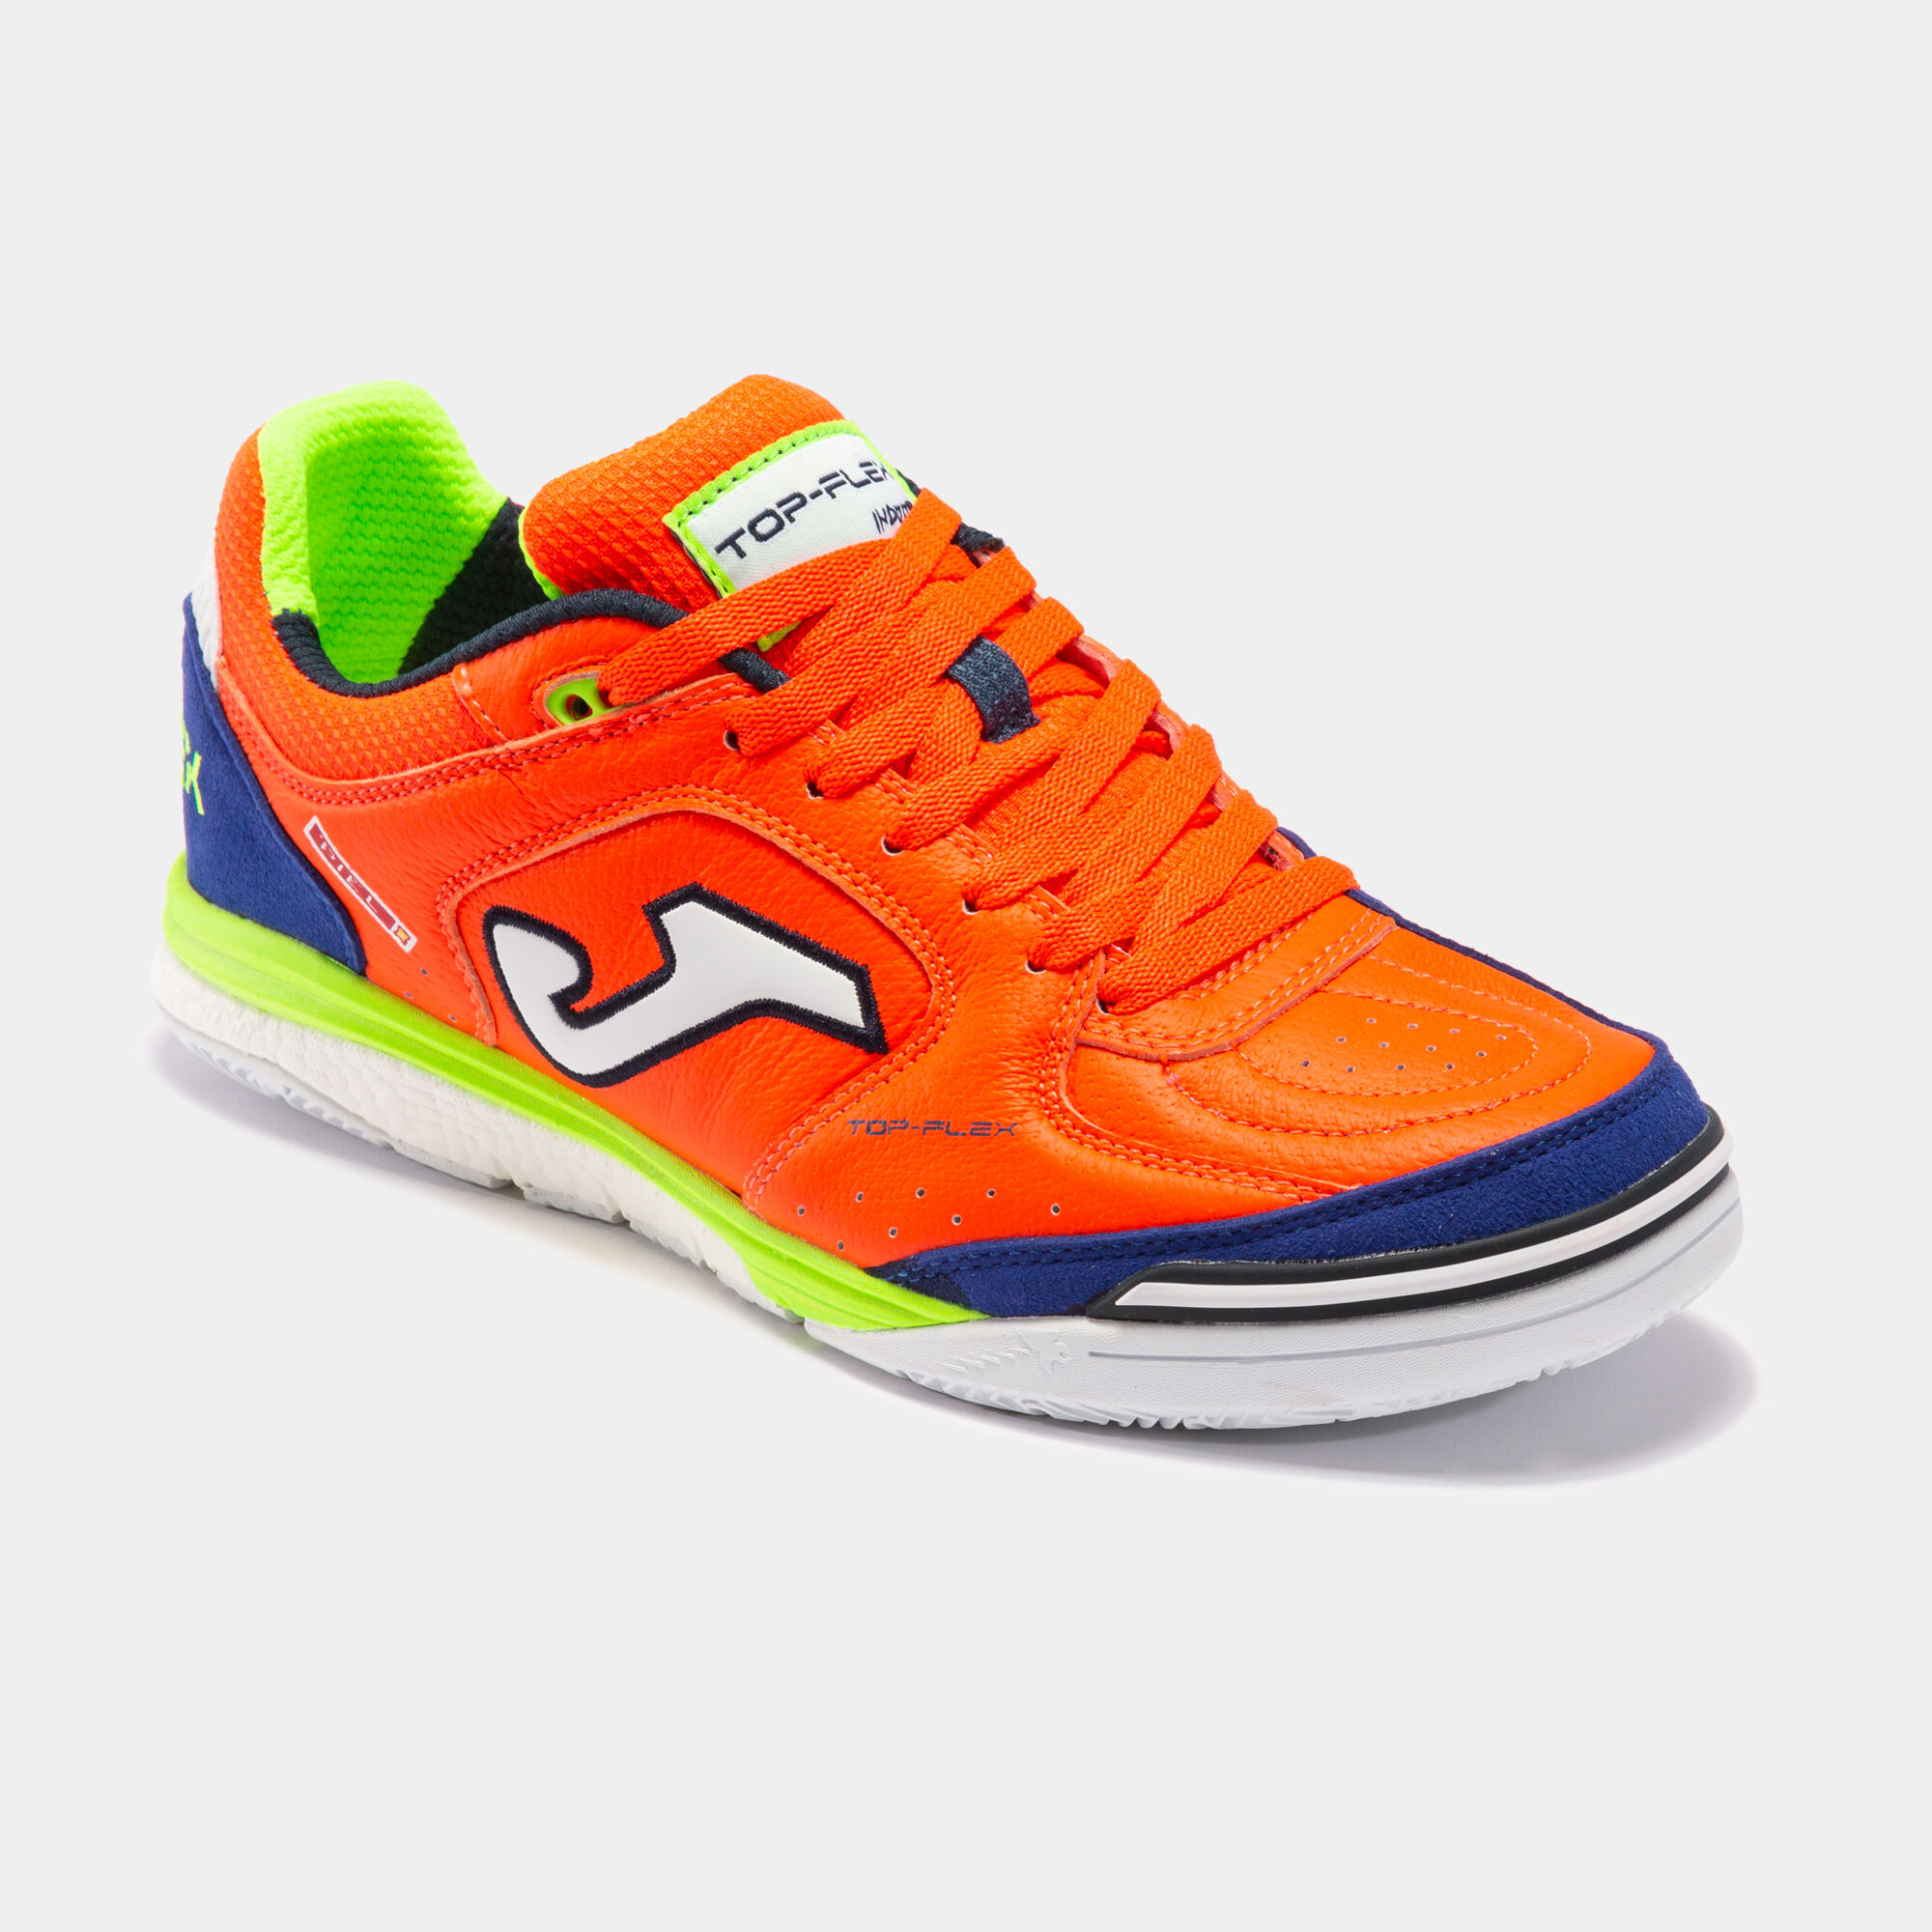 Futsal shoes Top Flex Rebound 22 indoor fluorescent orange royal blue